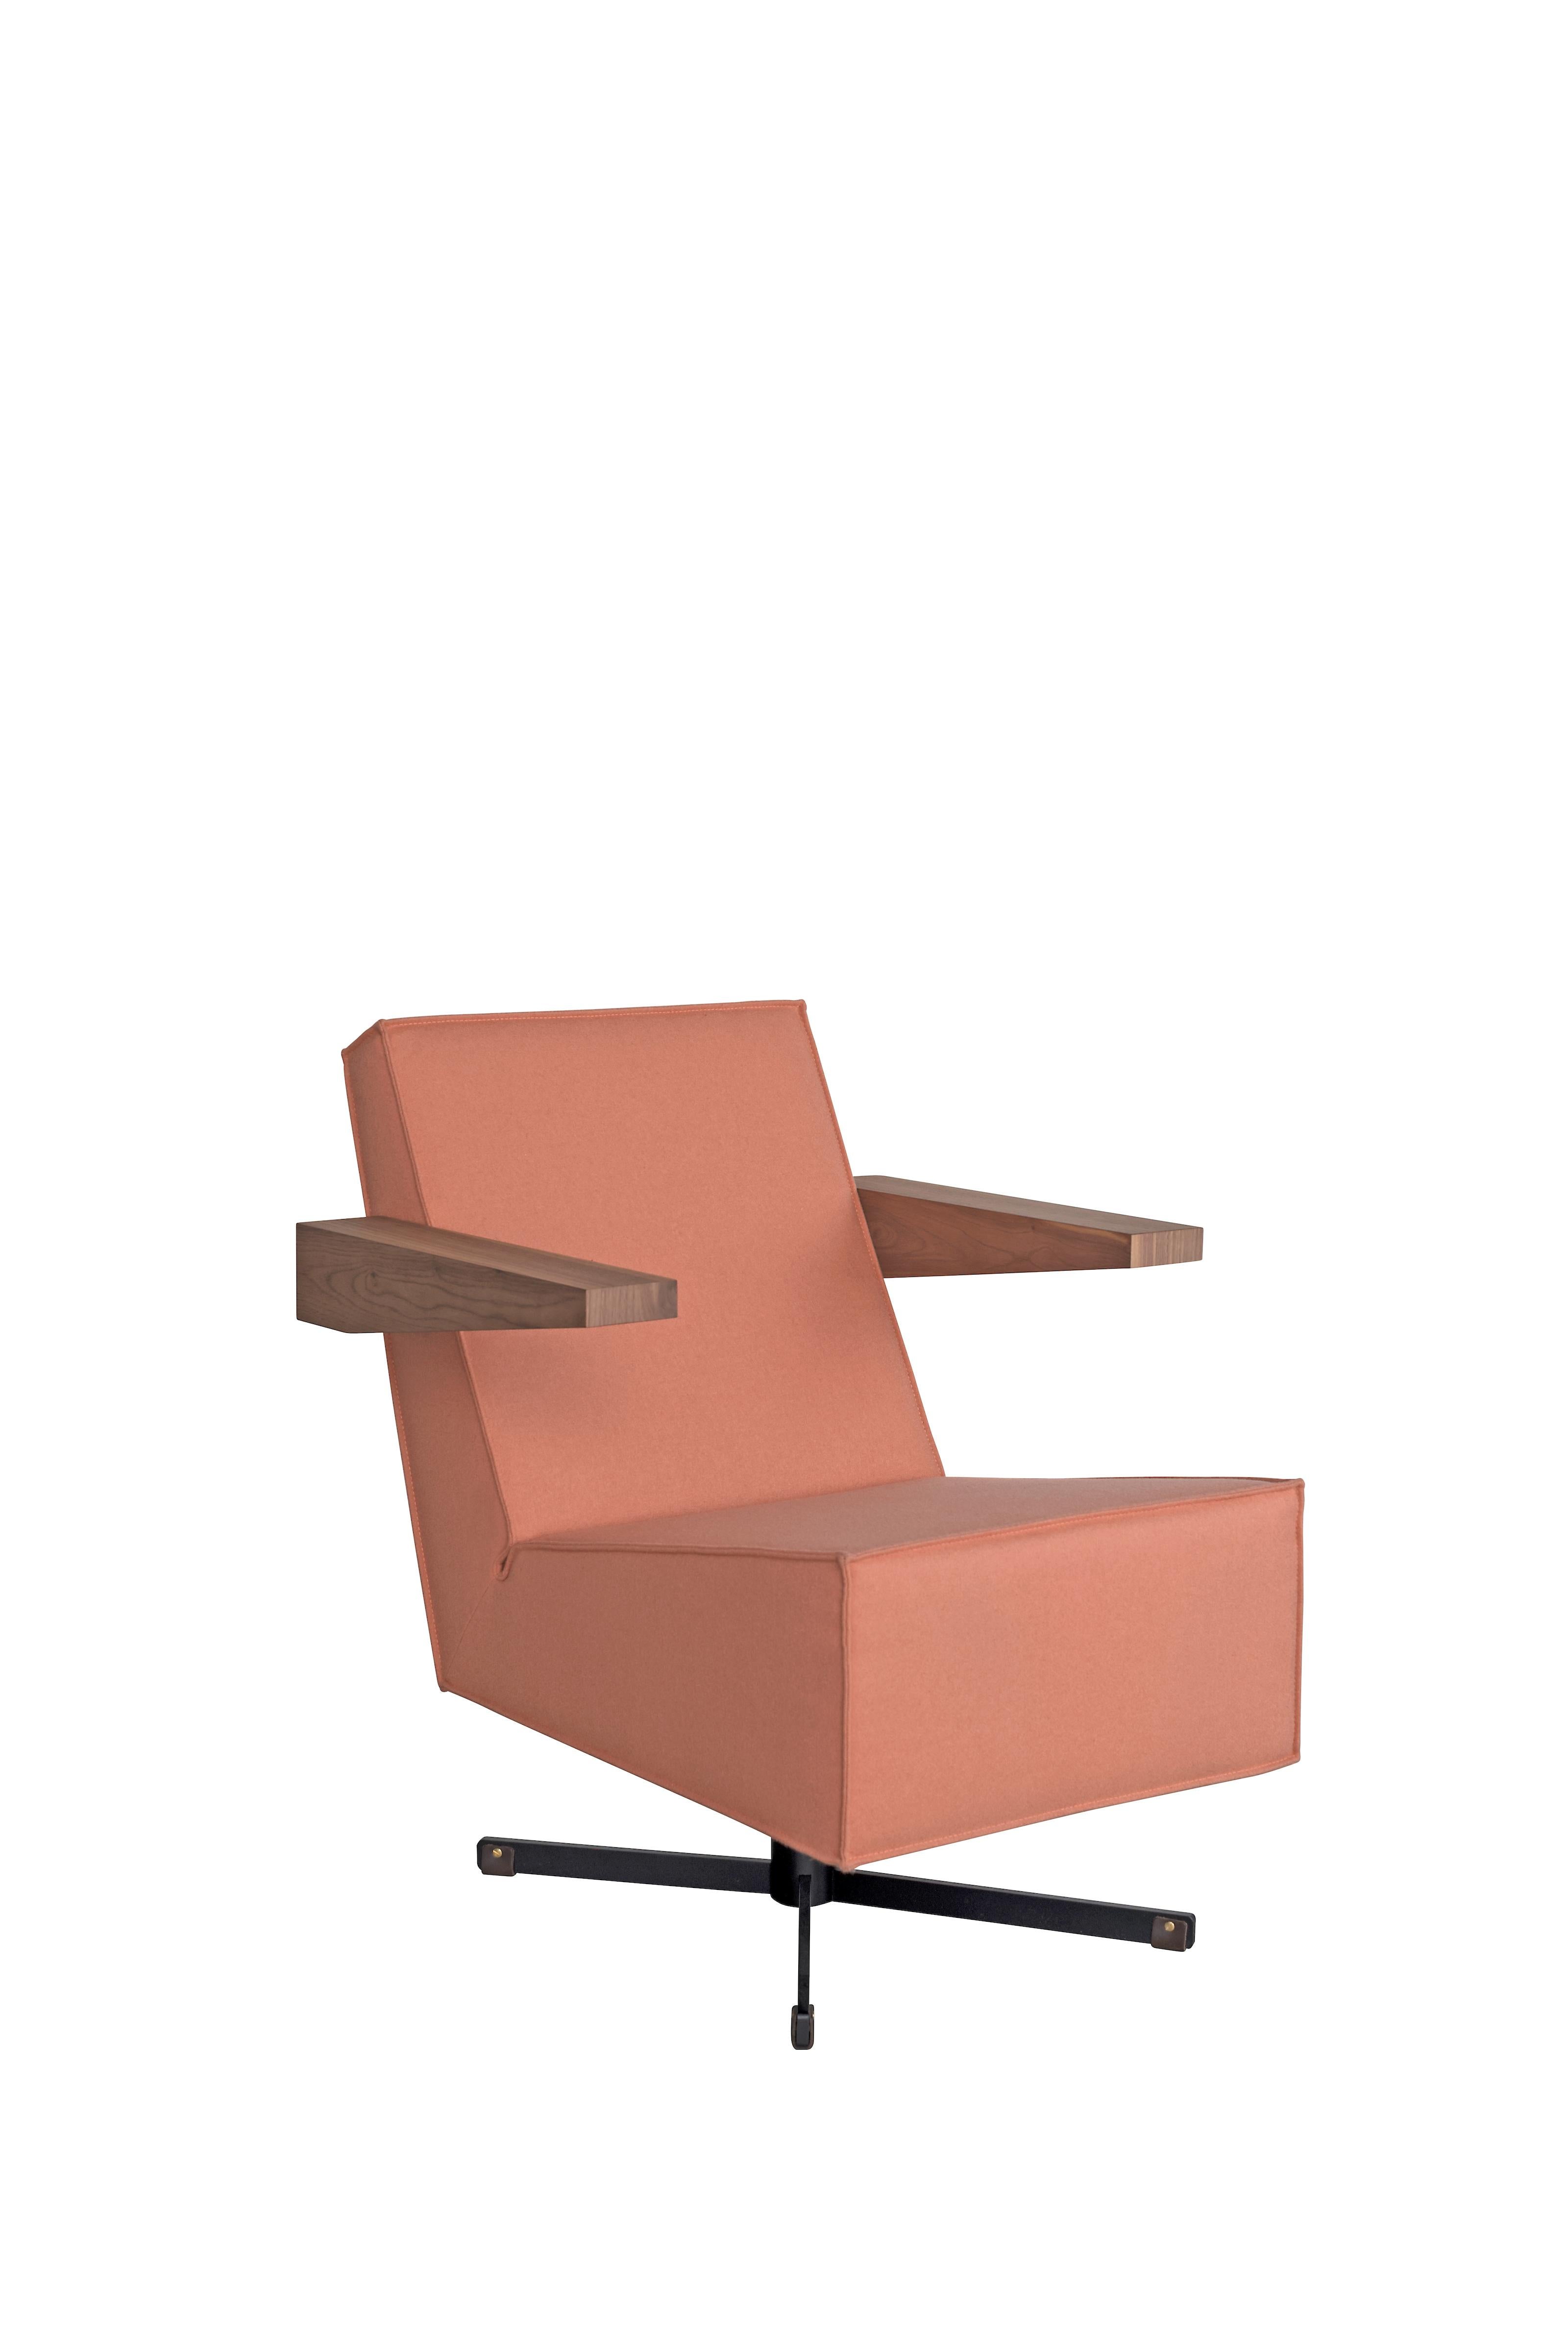 Dutch Gerrit Rietveld 1958 Unesco Press Room Chair for Spectrum, 'Colourful Vintage' For Sale